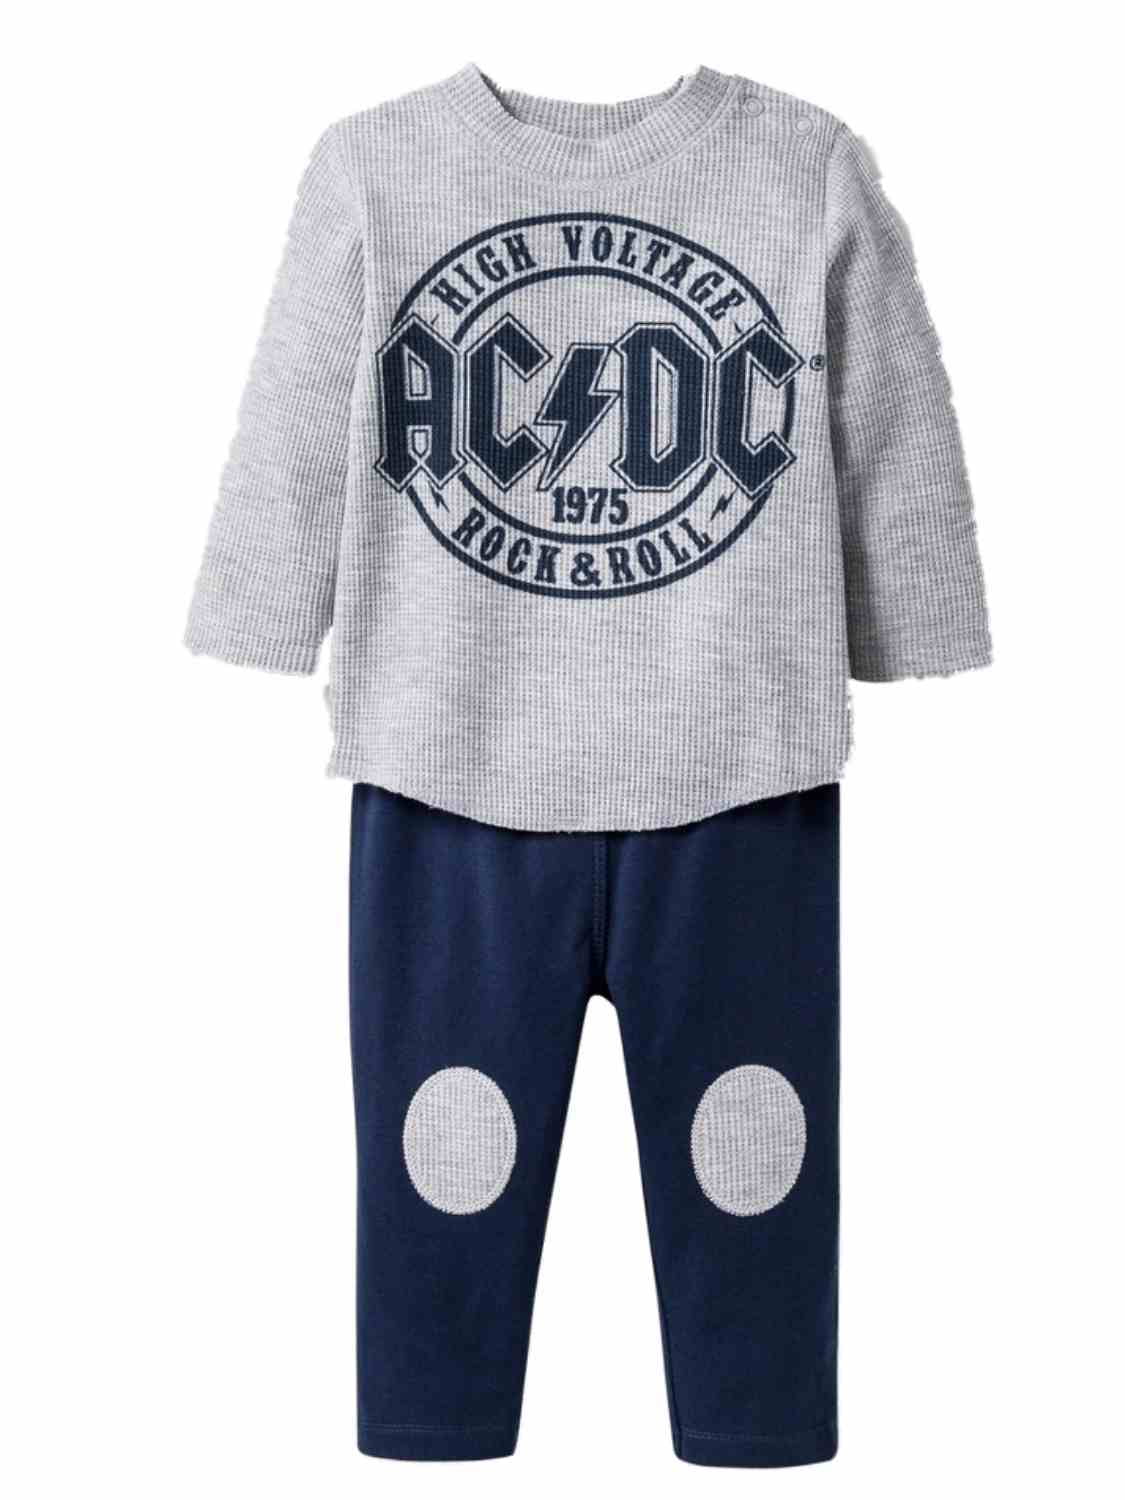 The city Testify shop Infant Boys ACDC Rock & Roll Baby Outfit AC/DC Shirt & Pants Set 3-6m -  Walmart.com